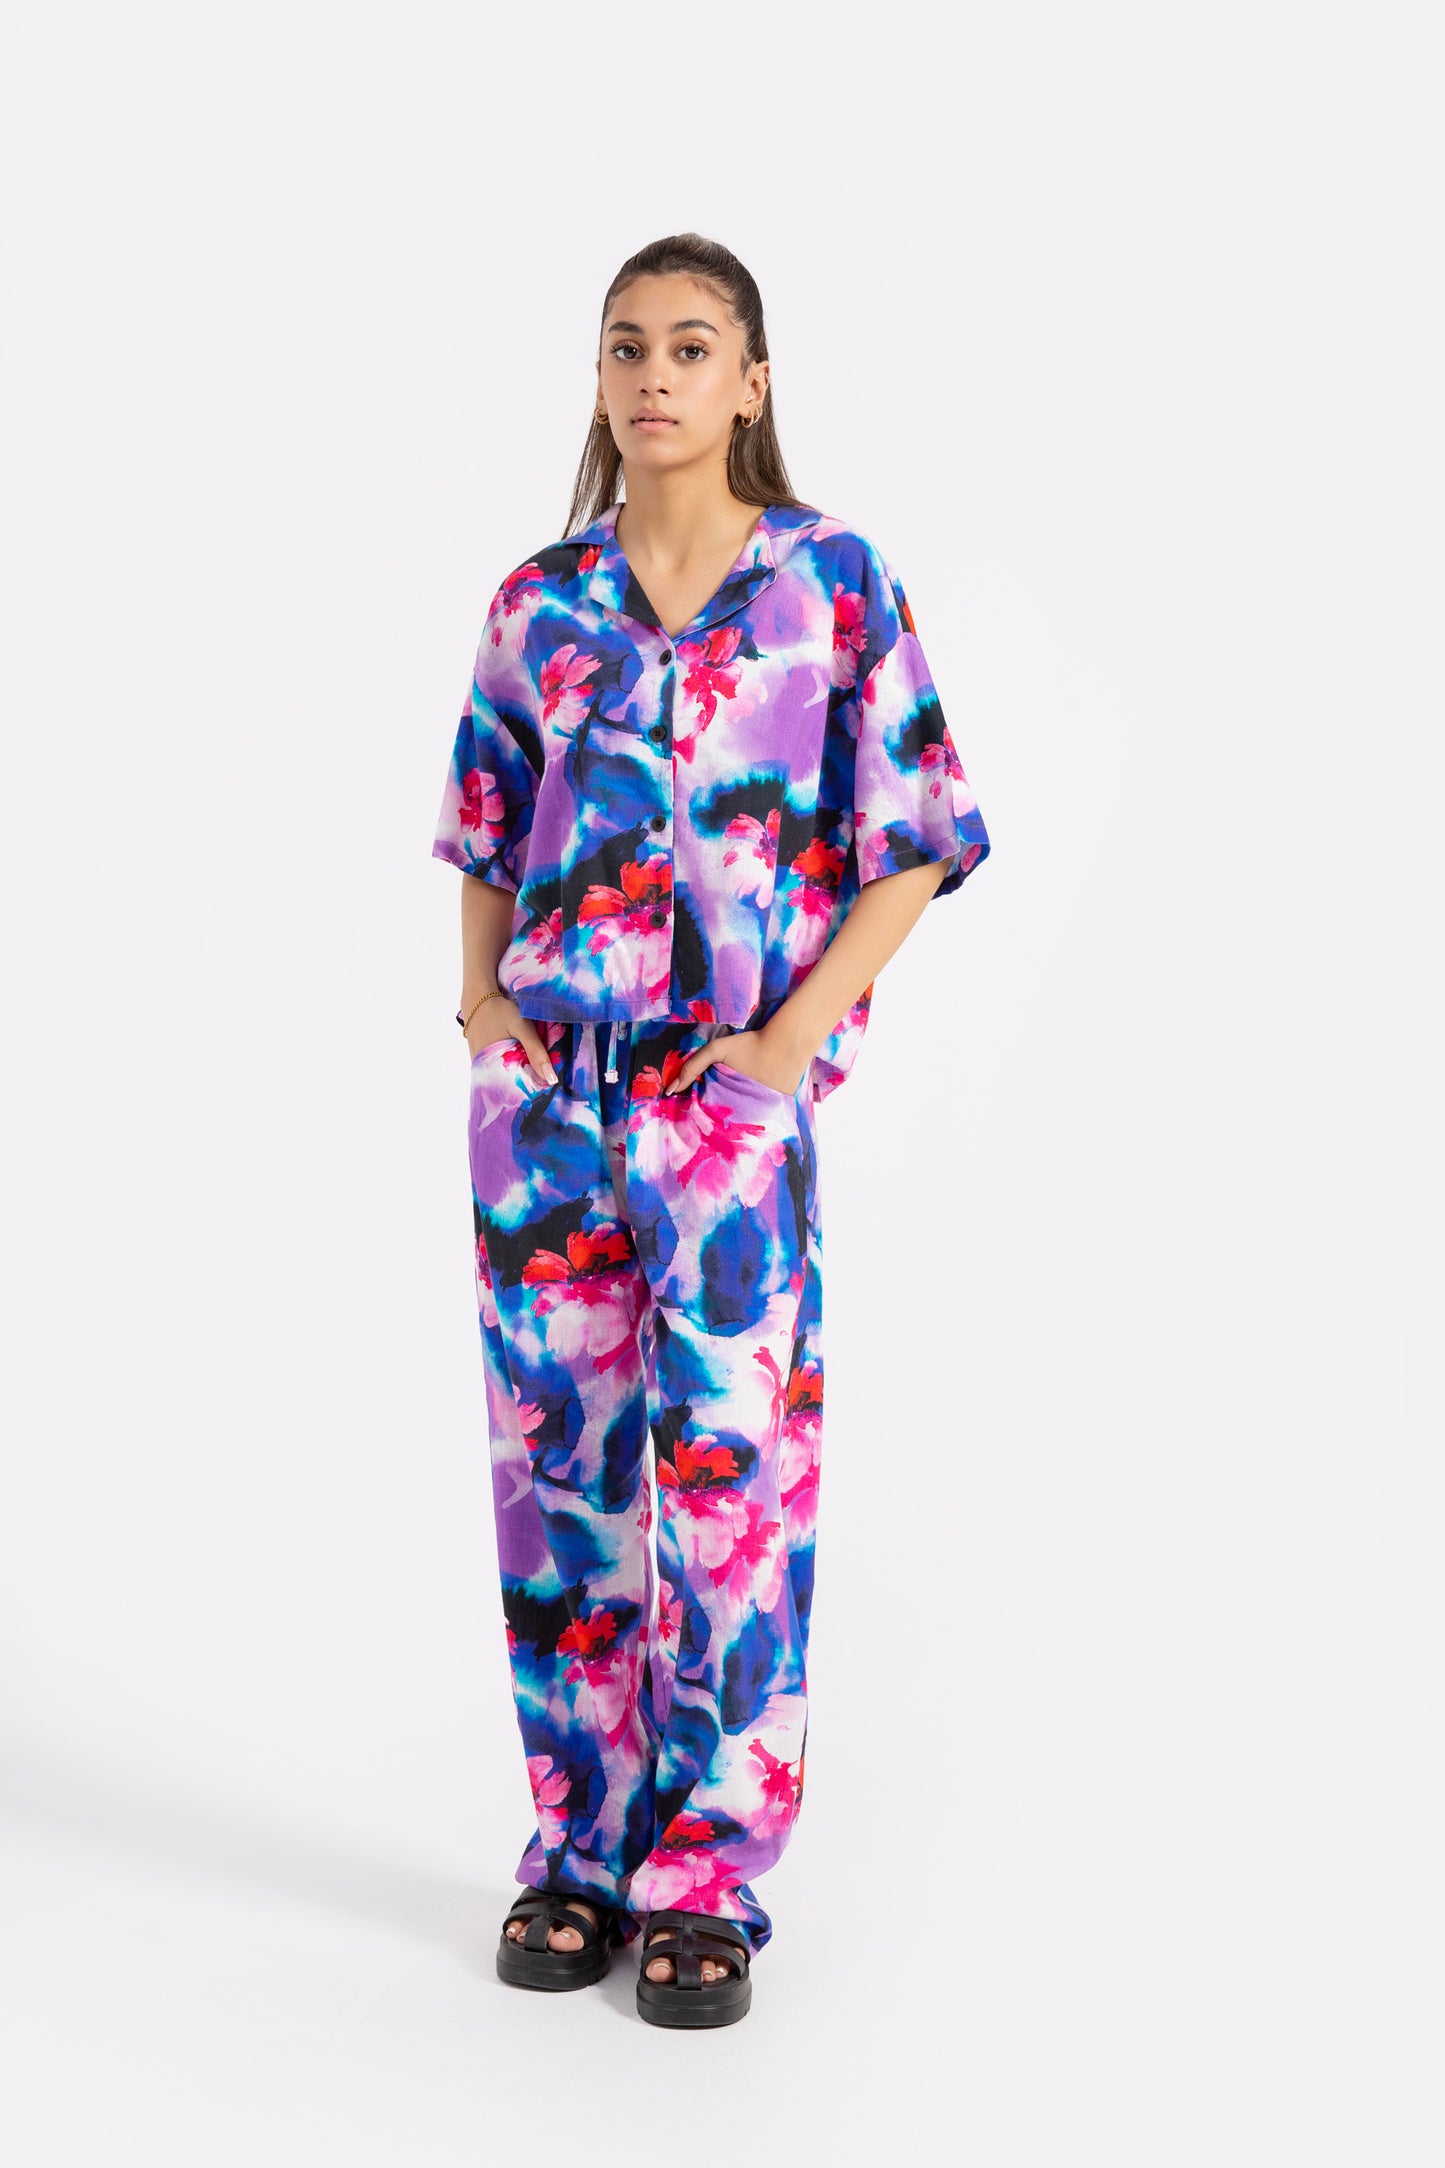 Watercolor floral printed suit